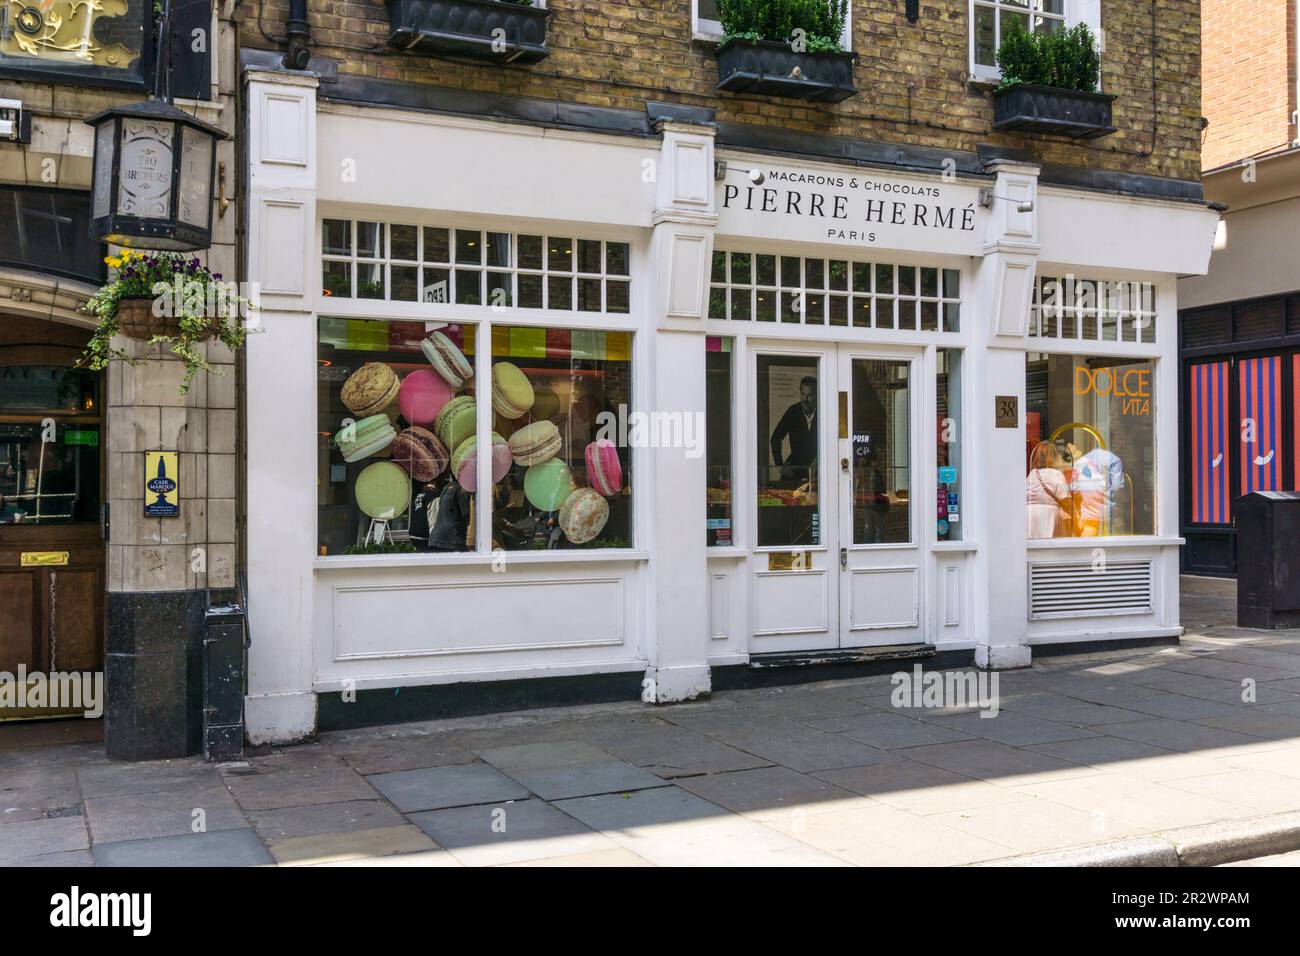 Pierre Herme macarons & chocolats Shop a Monmouth Street, Covent Garden, Londra. Foto Stock